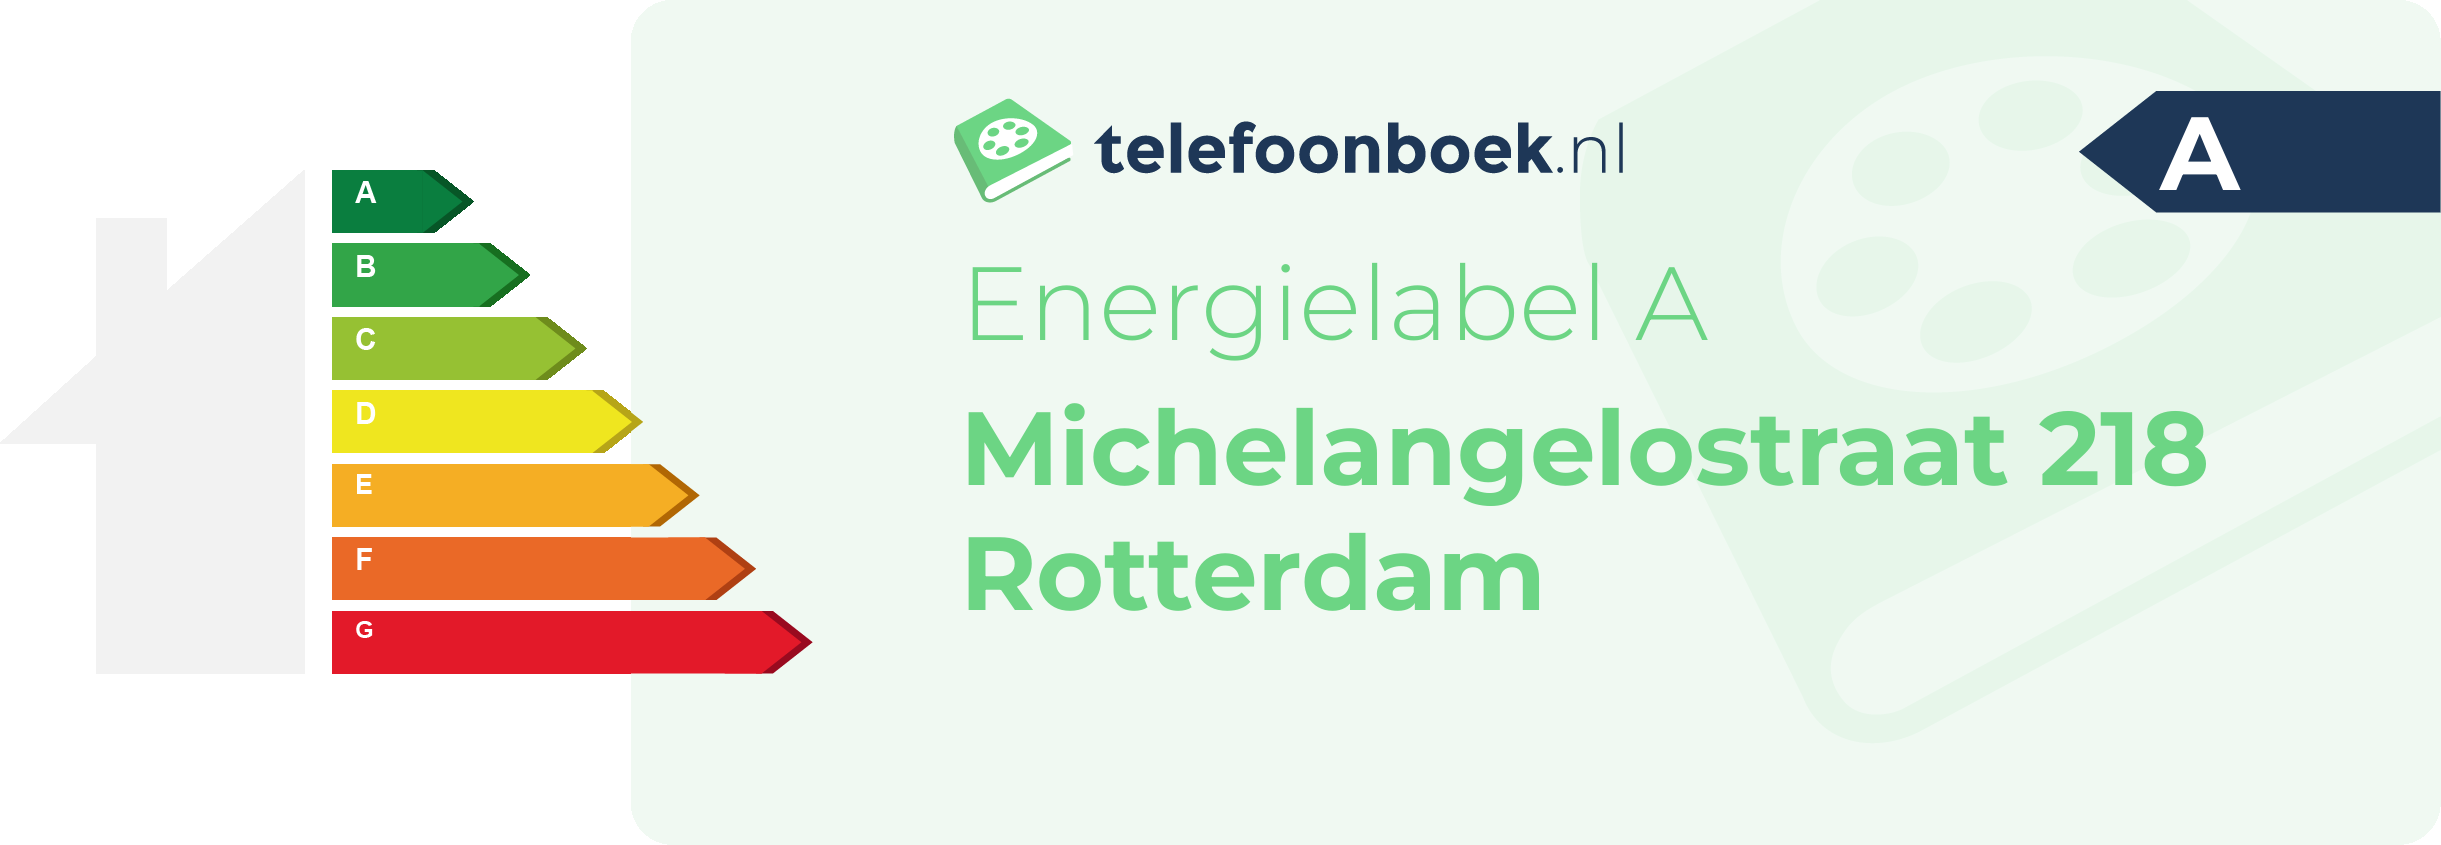 Energielabel Michelangelostraat 218 Rotterdam